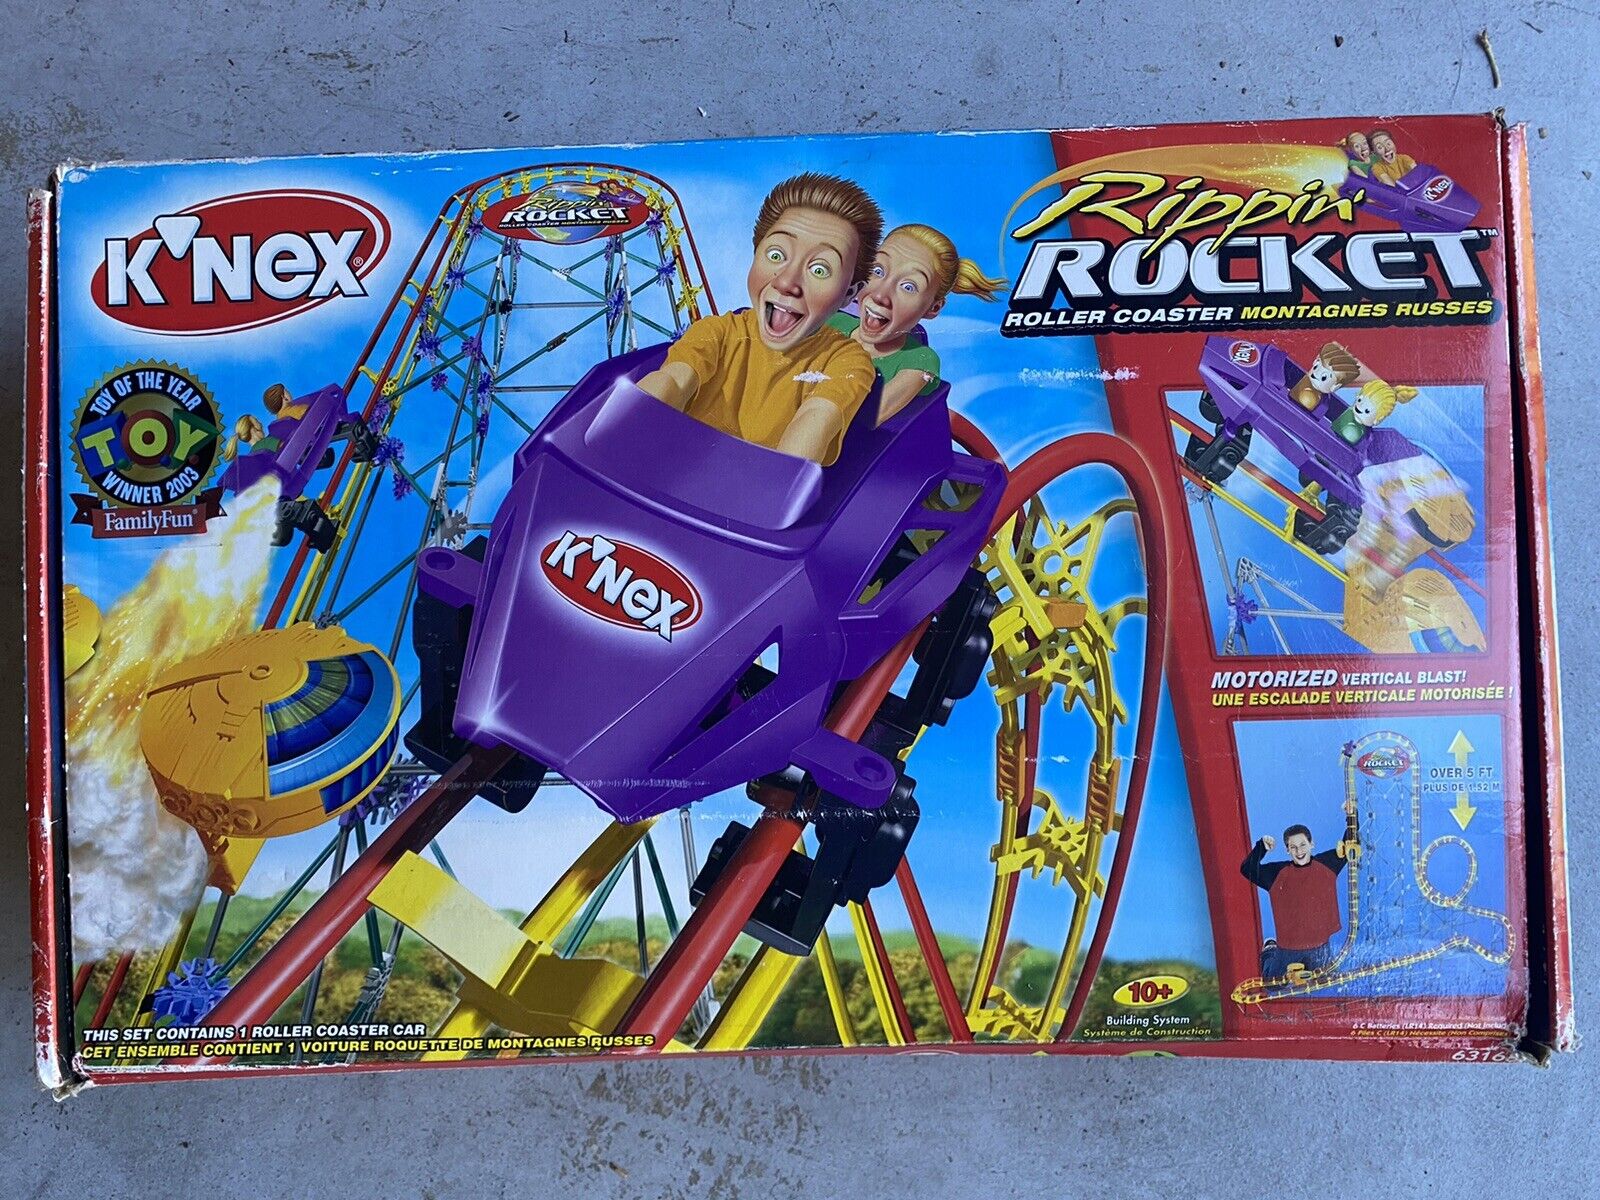 K'NEX 63166 Rippin' Rocket Roller Coaster as Is for sale online | eBay